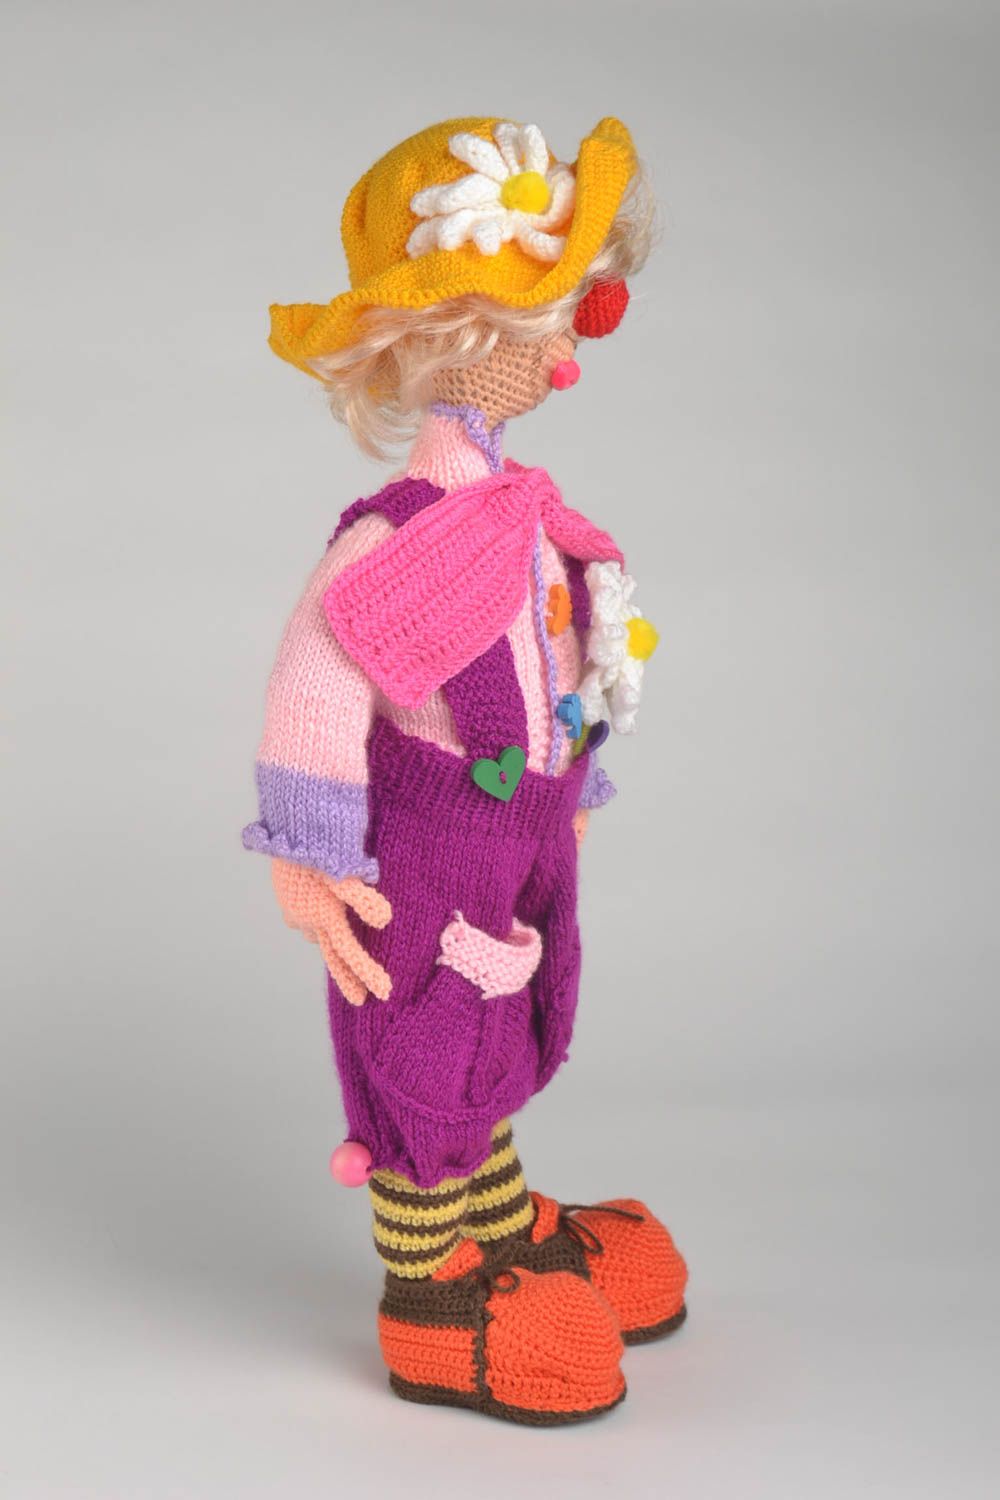 Unusual handmade crochet toy stuffed toy clown soft toy birthday gift ideas photo 2